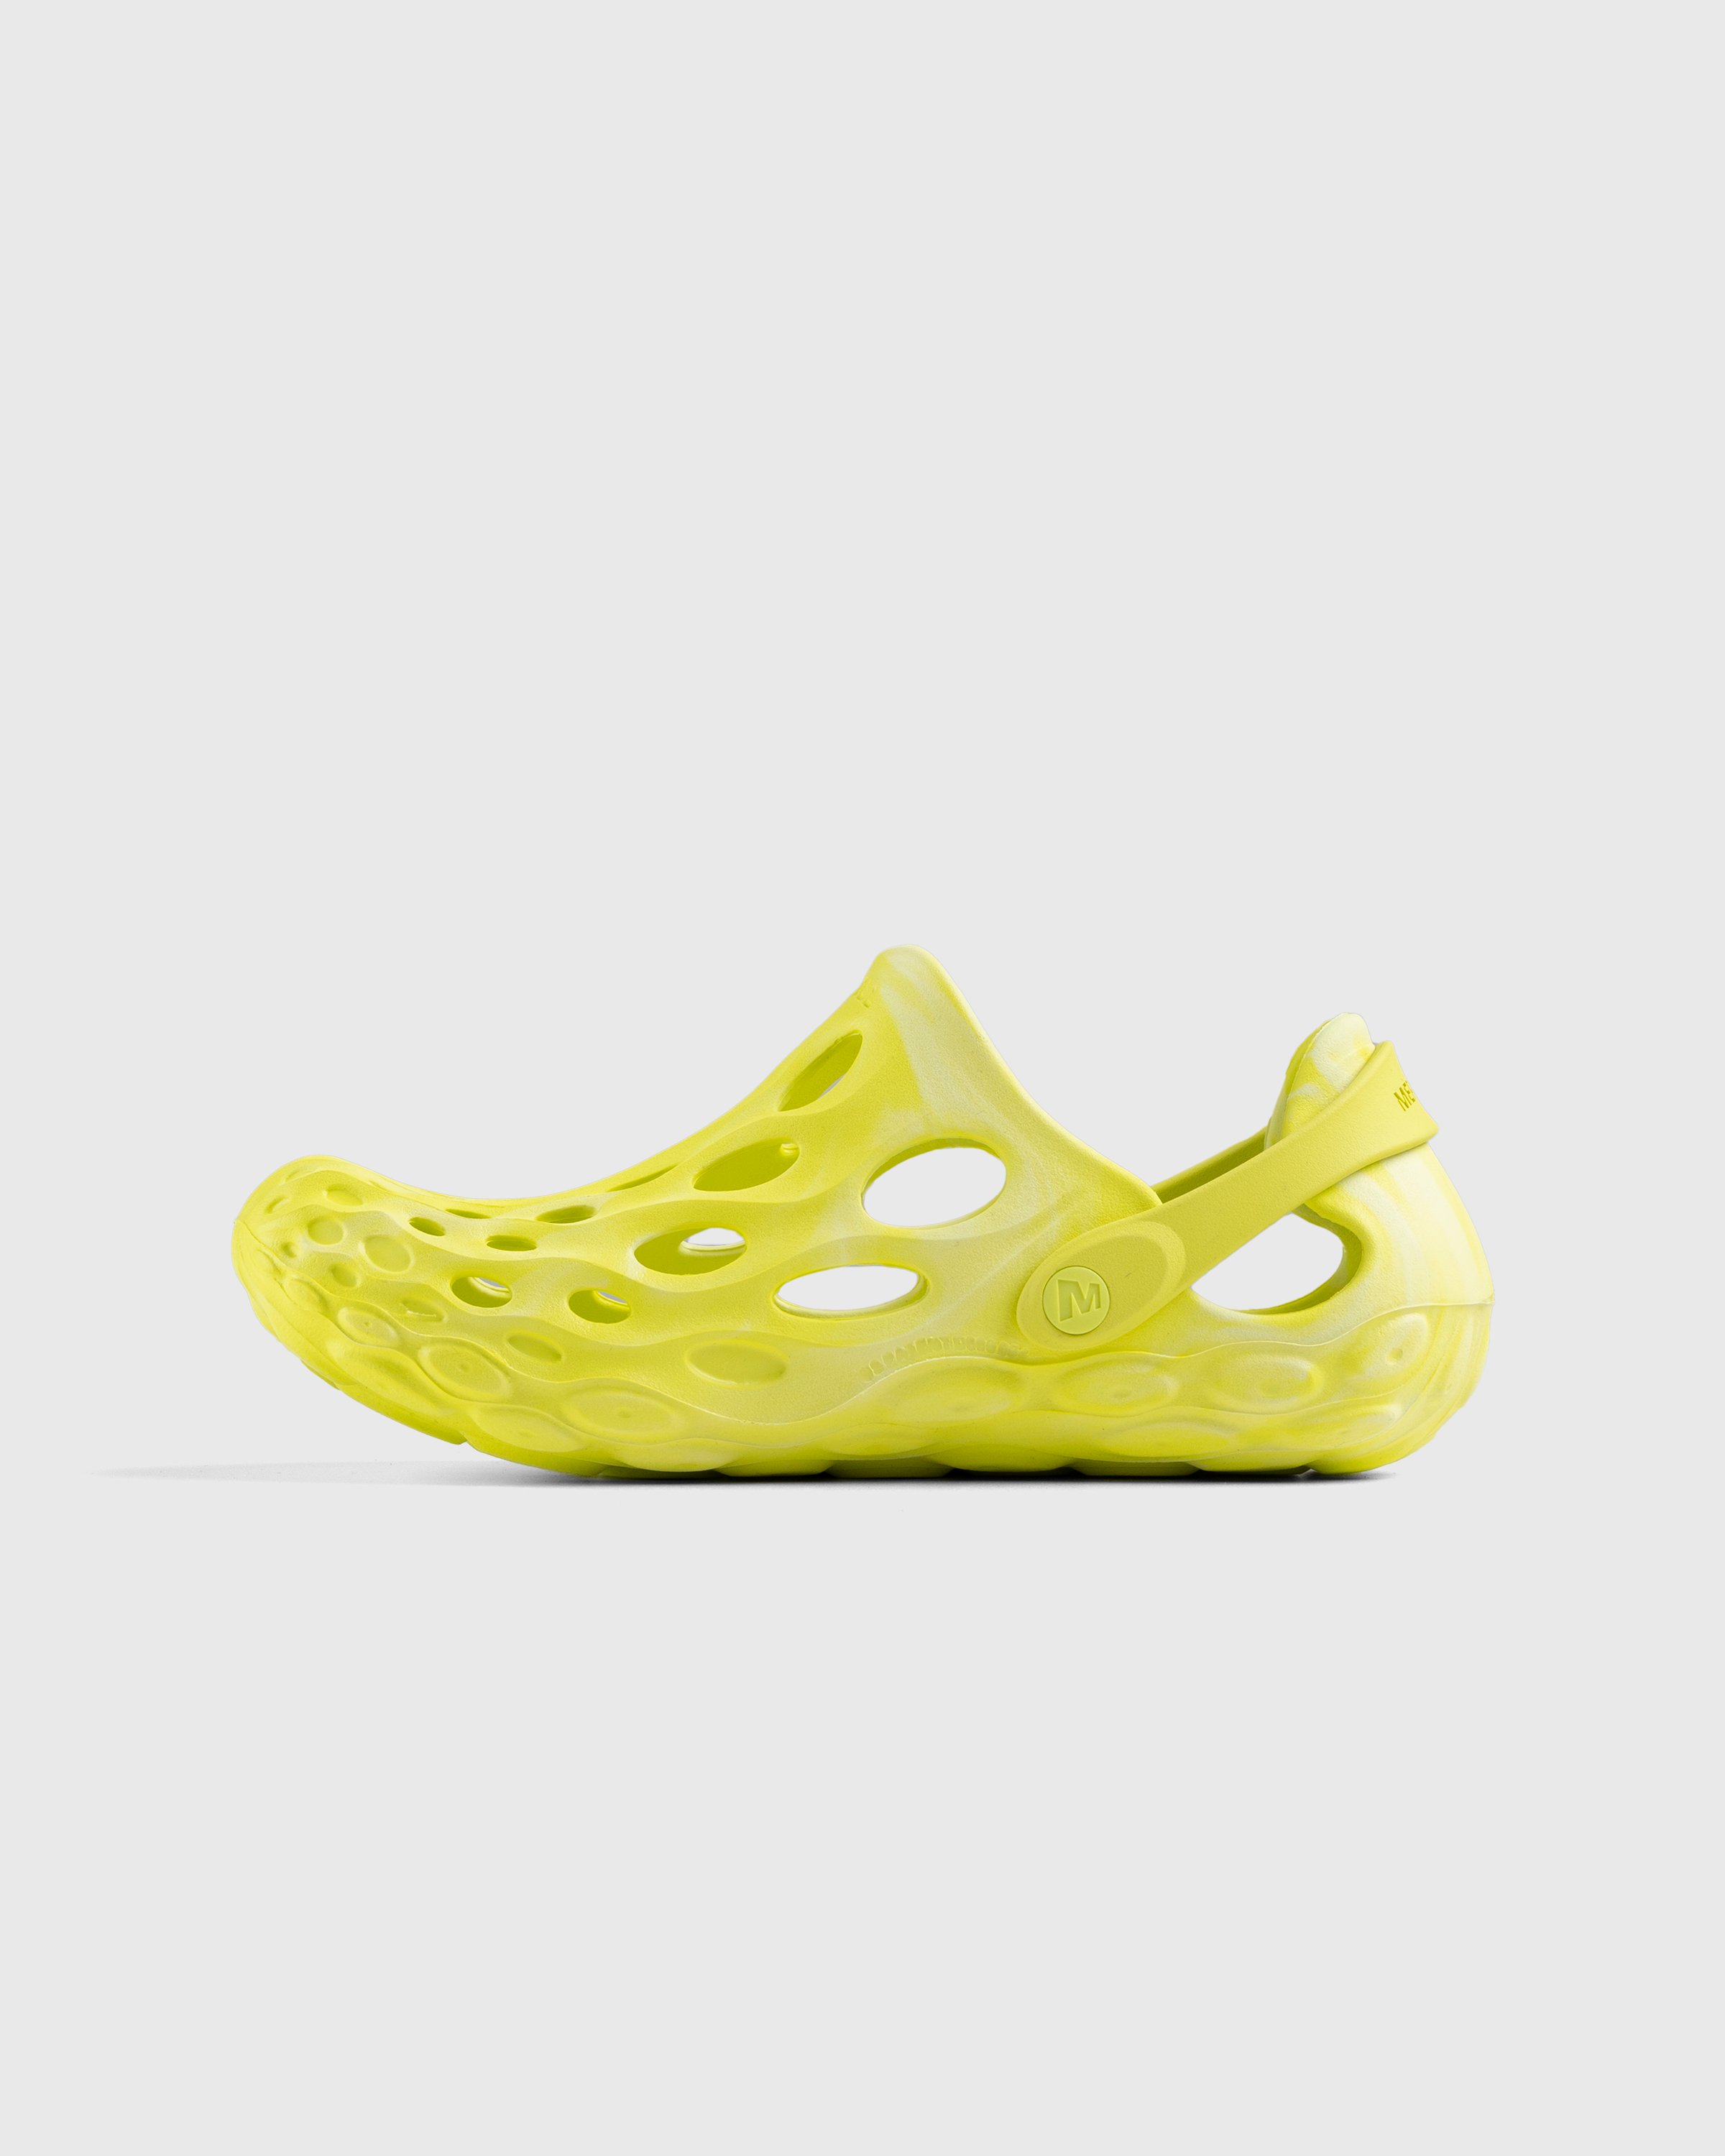 Merrell - Hydro Moc Pomelo - Footwear - Yellow - Image 2